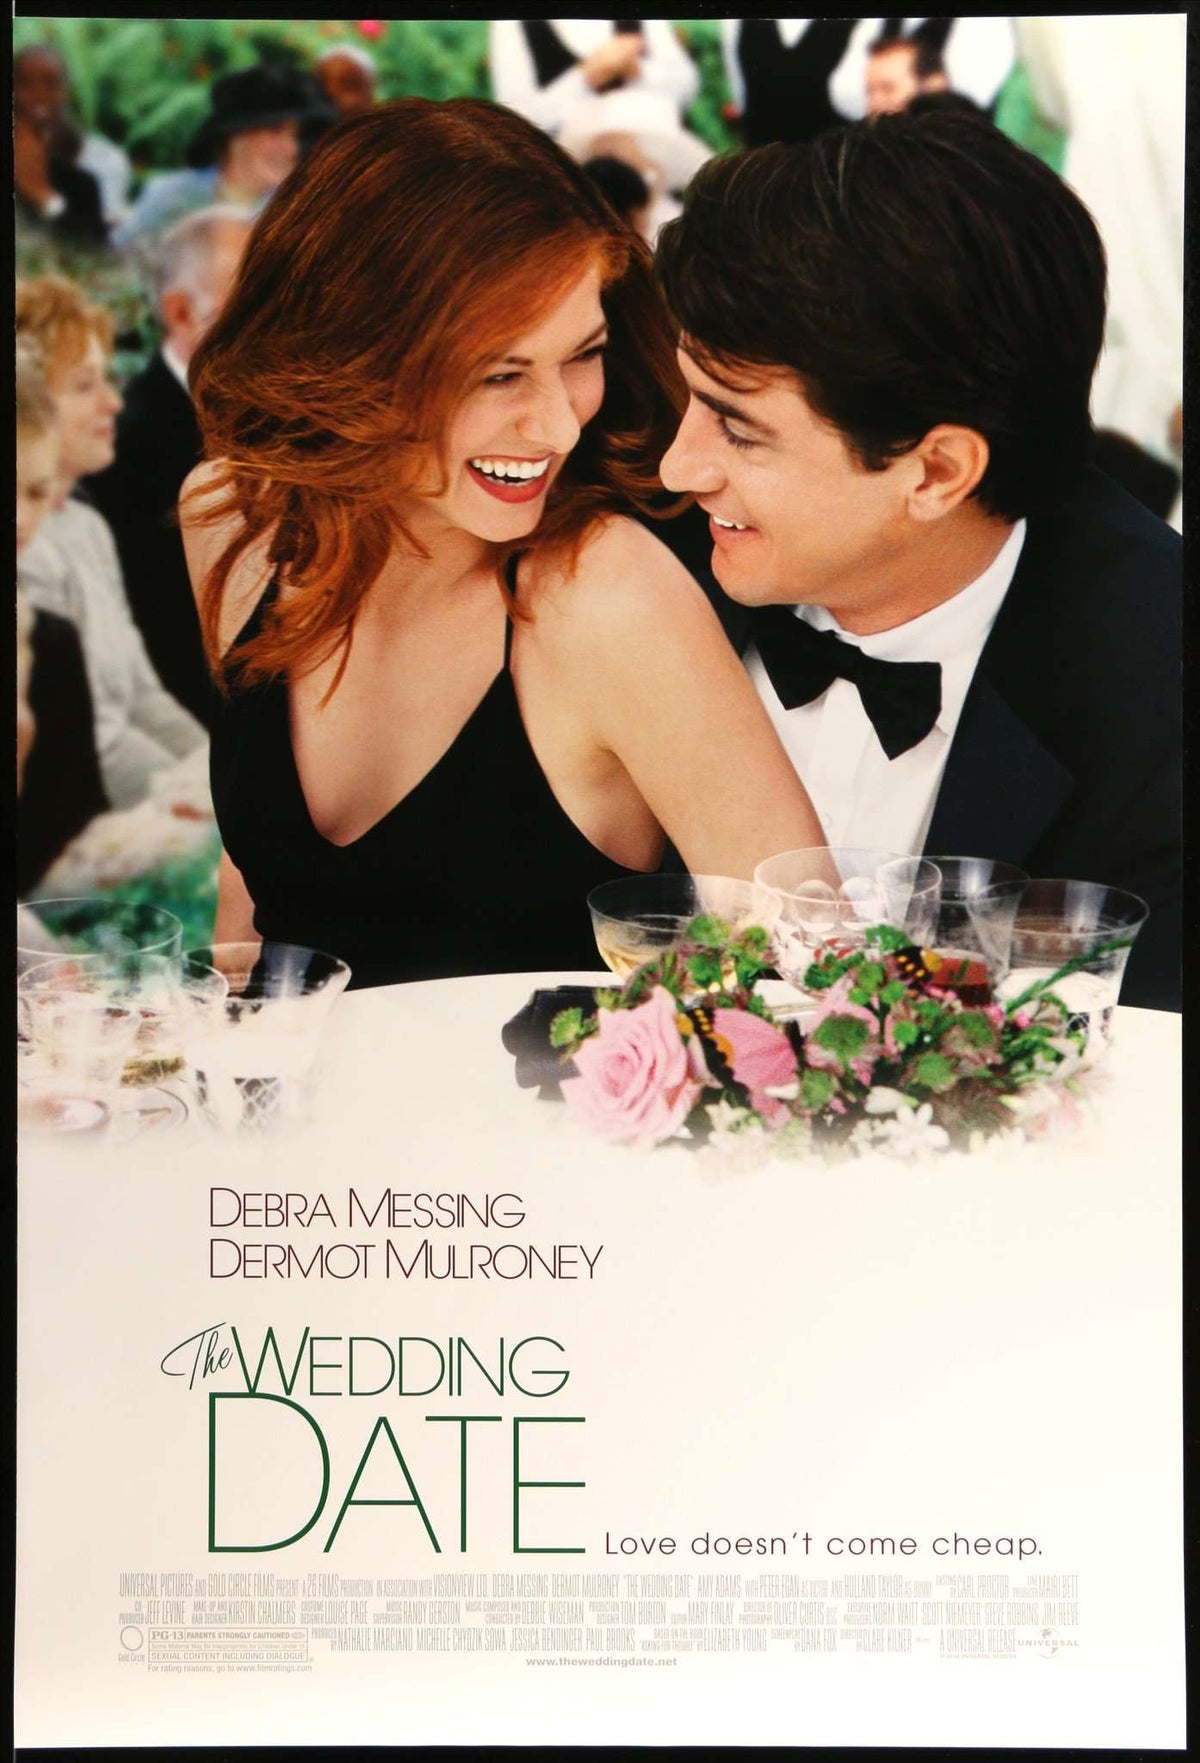 Wedding Date (2005) original movie poster for sale at Original Film Art